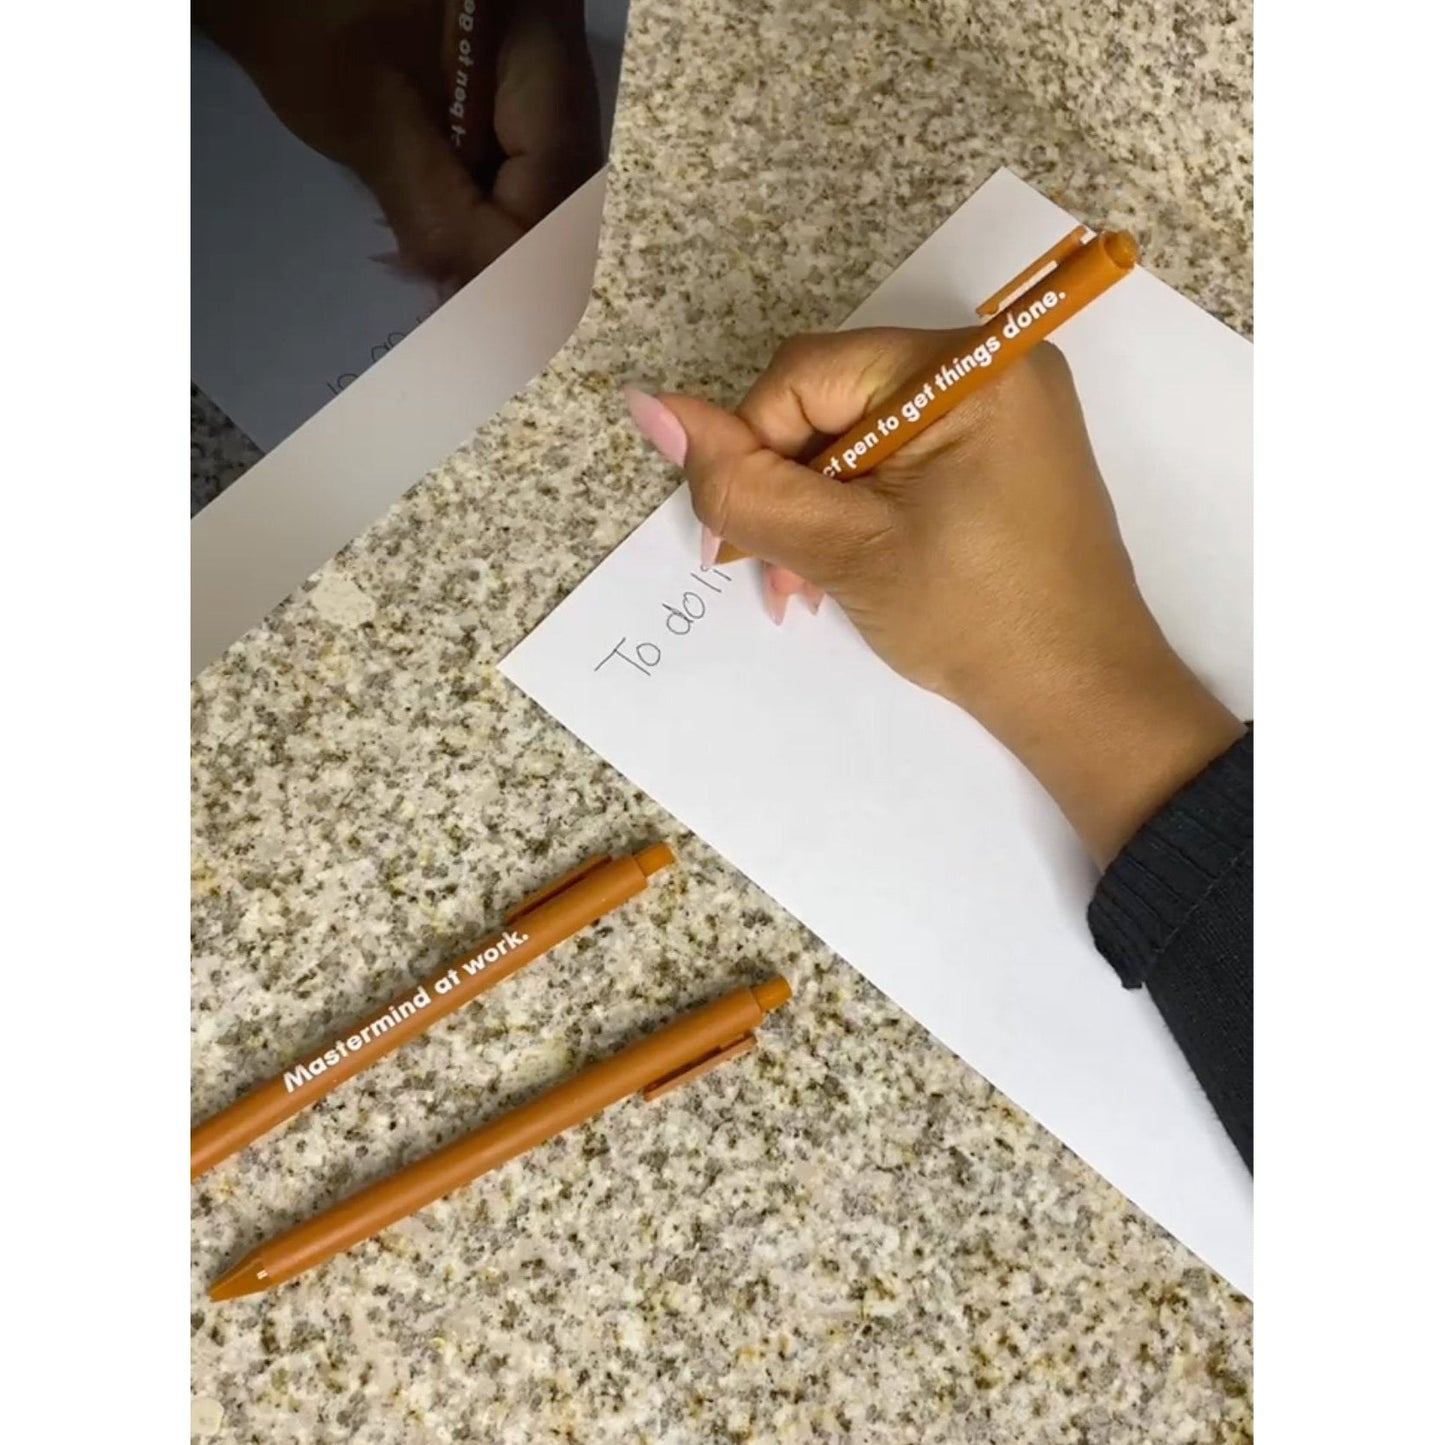 Mastermind At Work Pen 🏆 | Gel Click Pen in Caramel | Set of 30